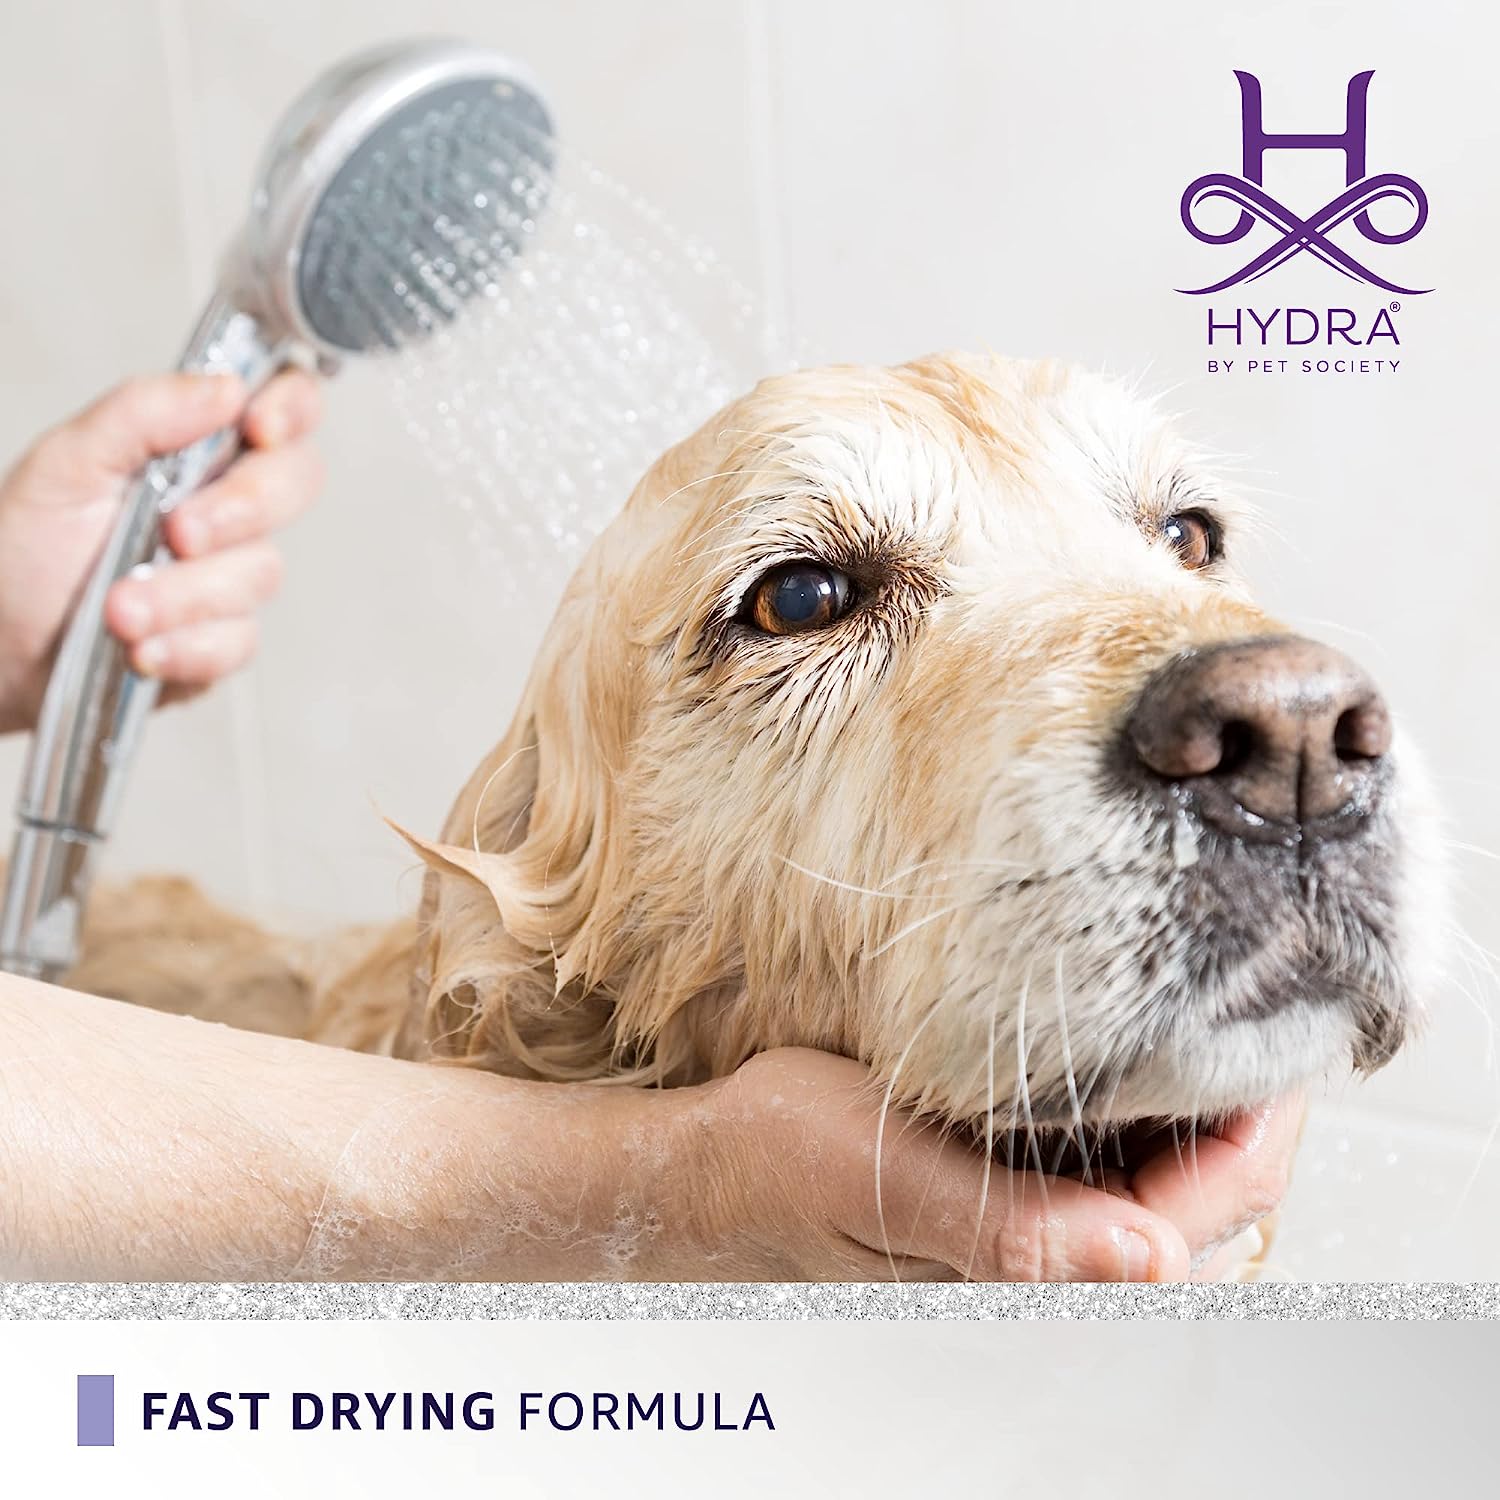 Hydra Silky-Smooth Shampoo for Pets